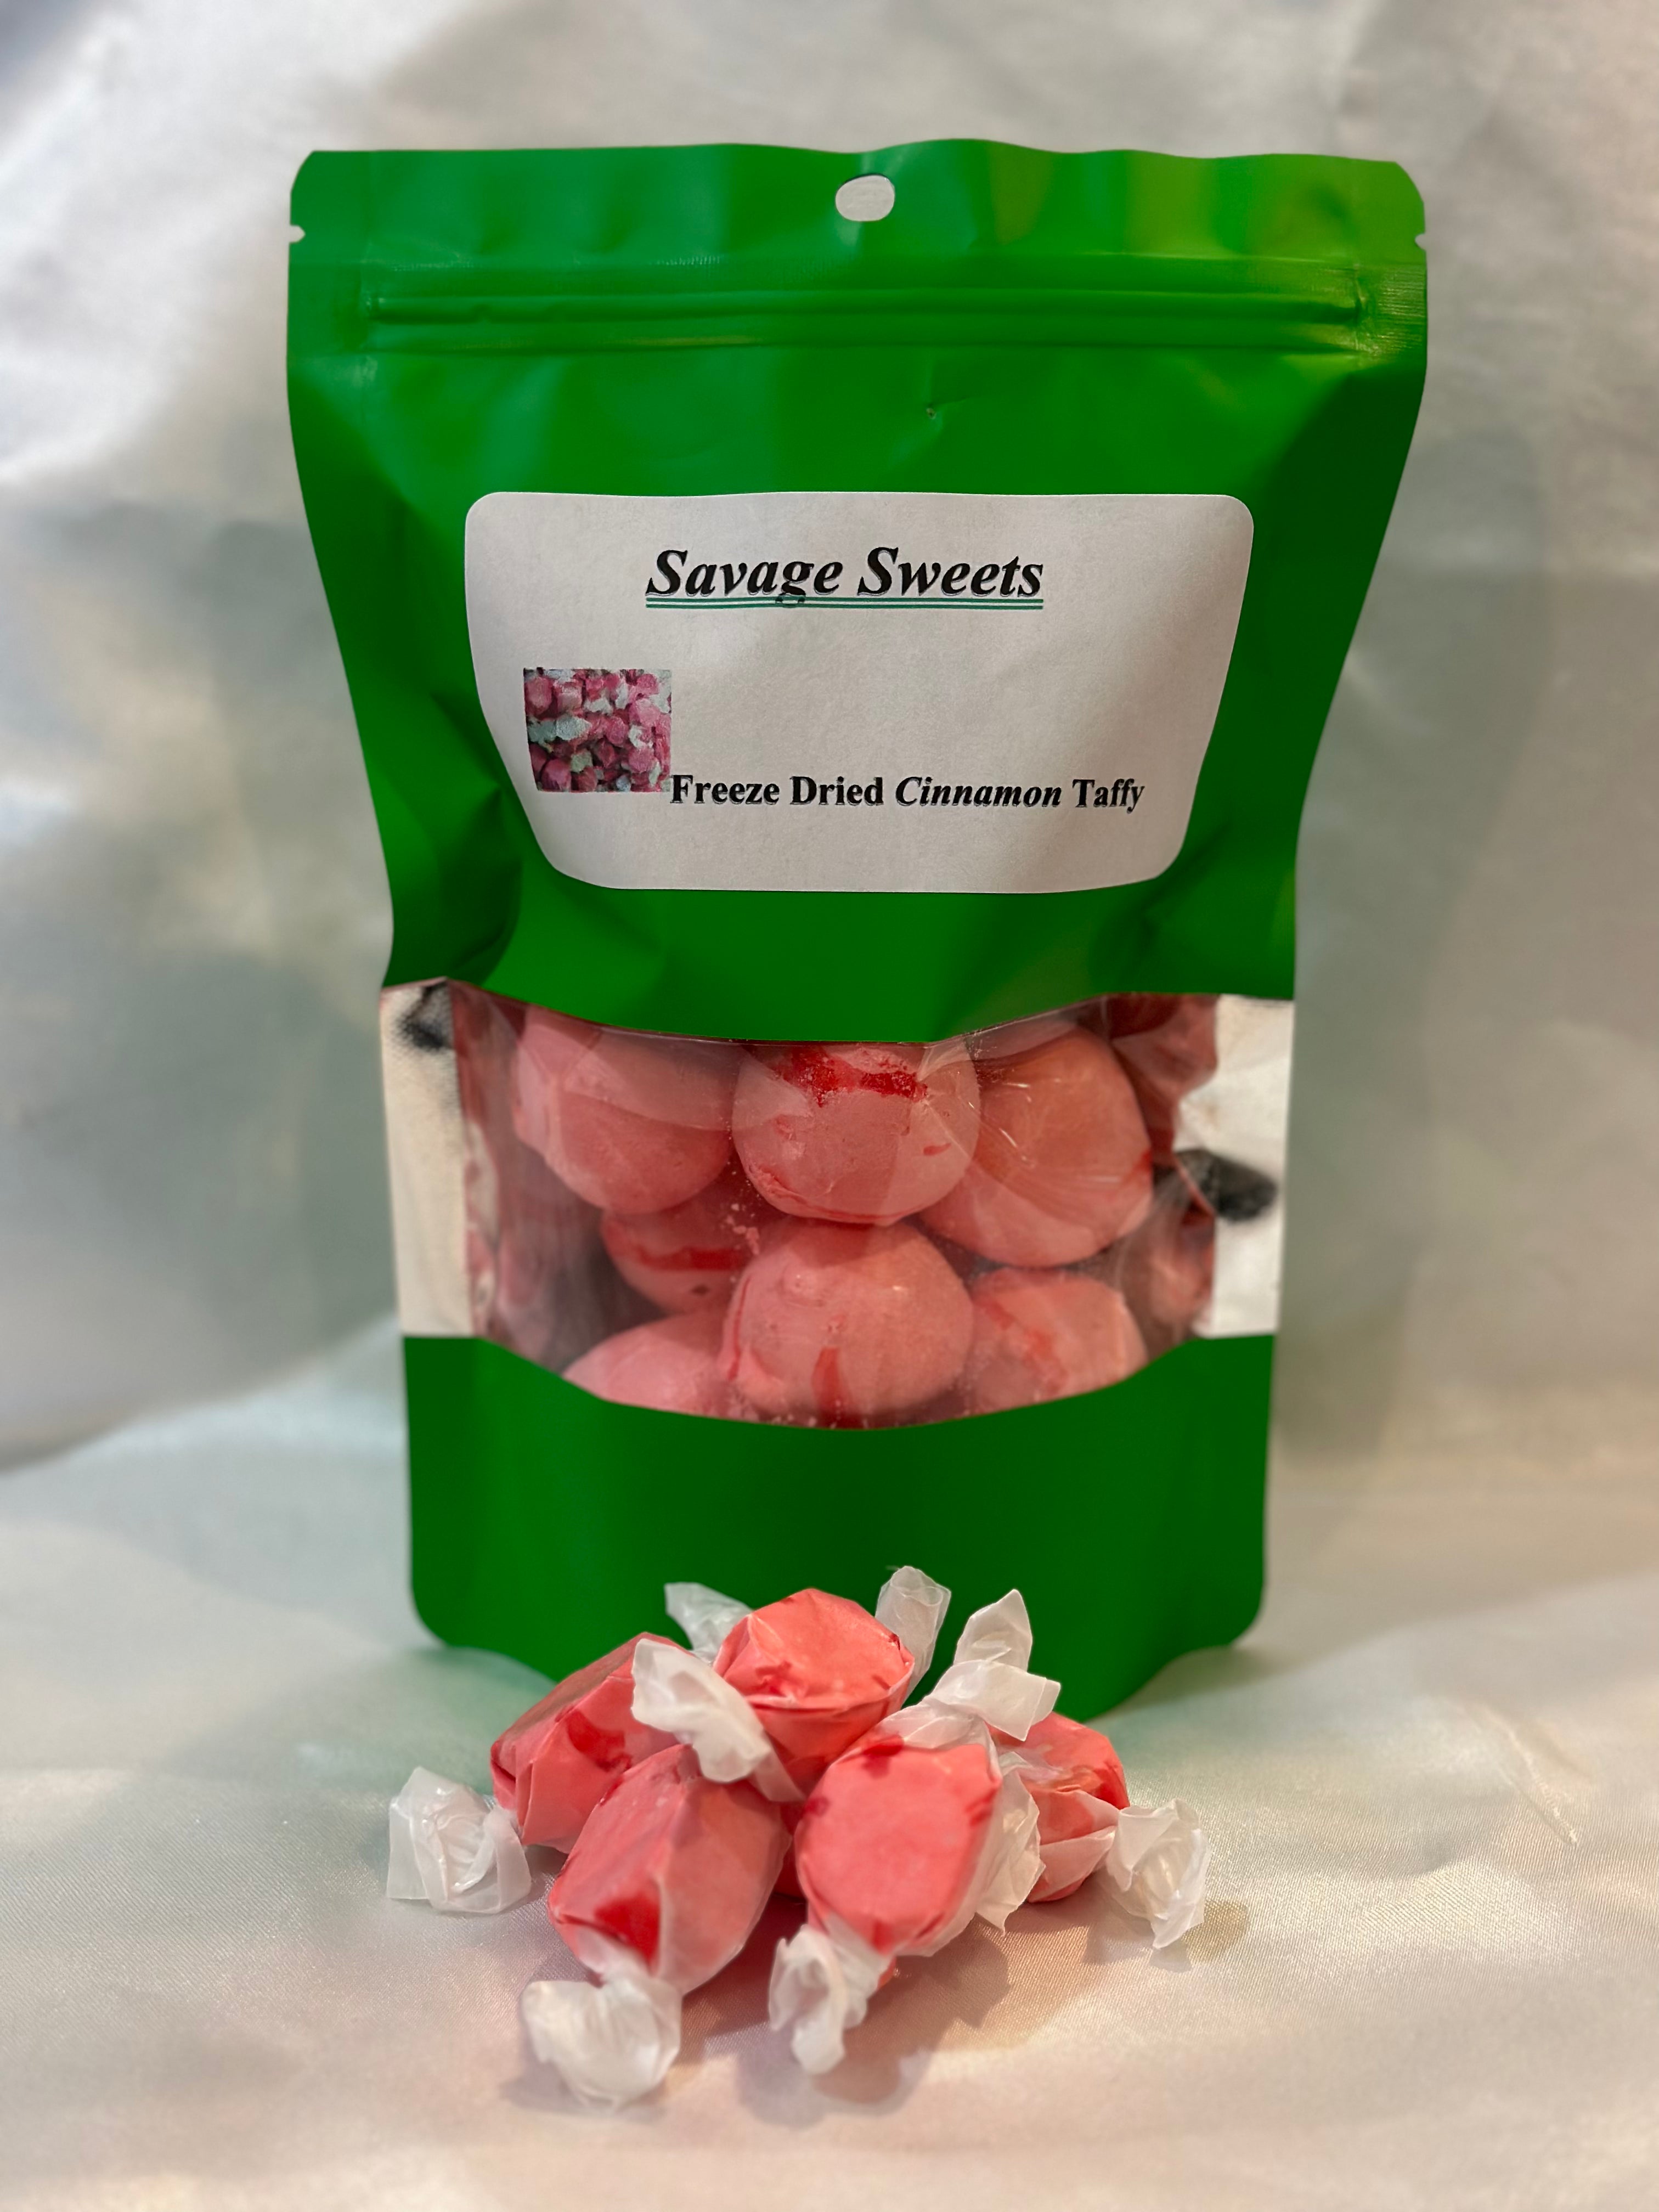 Freeze dried Candy Corn – Savage Sweets